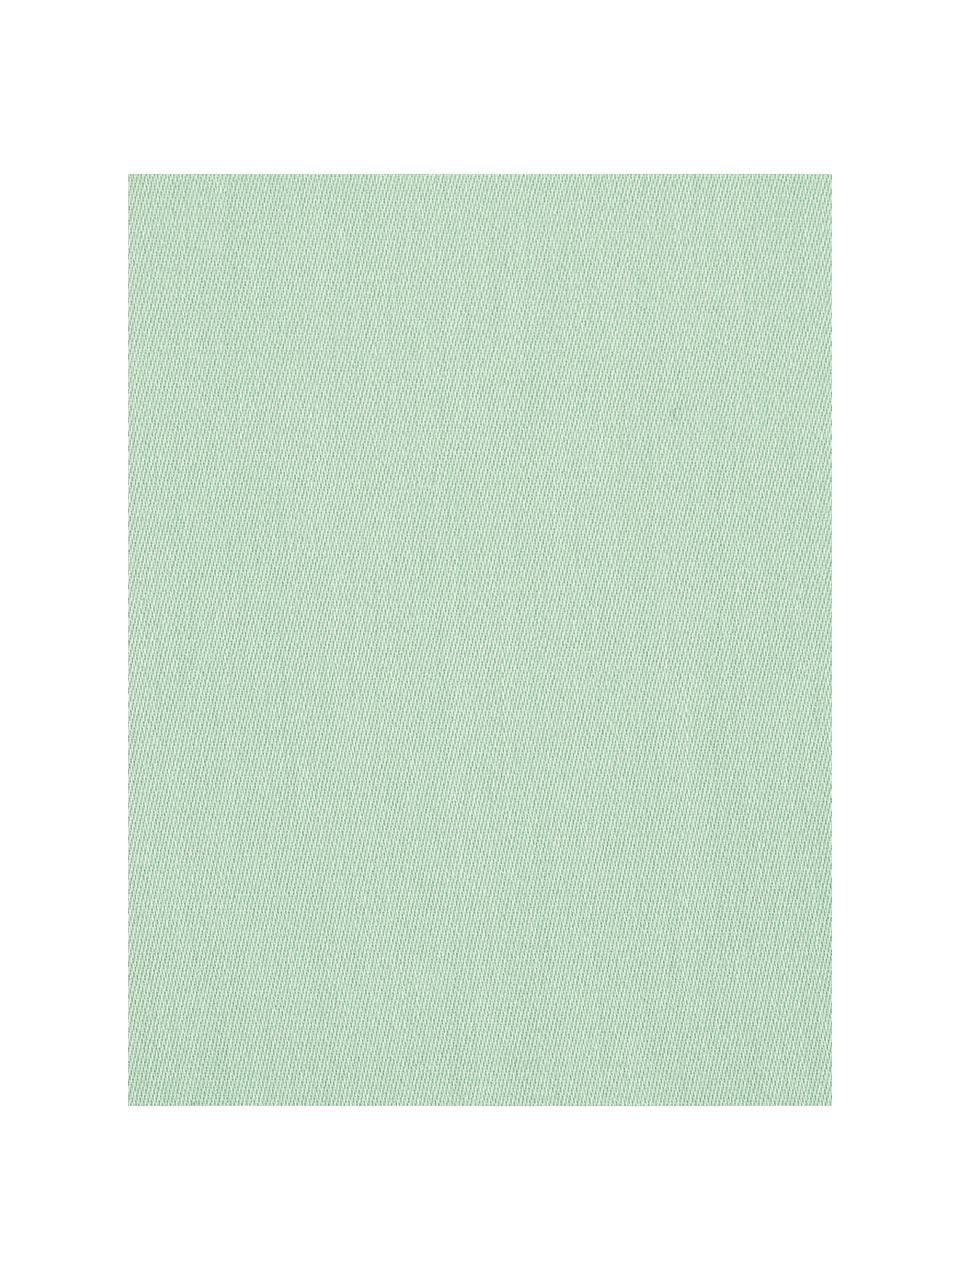 Baumwollsatin-Kissenbezug Comfort in Salbeigrün, 50 x 70 cm, Webart: Satin, leicht glänzend Fa, Salbeigrün, B 50 x L 70 cm